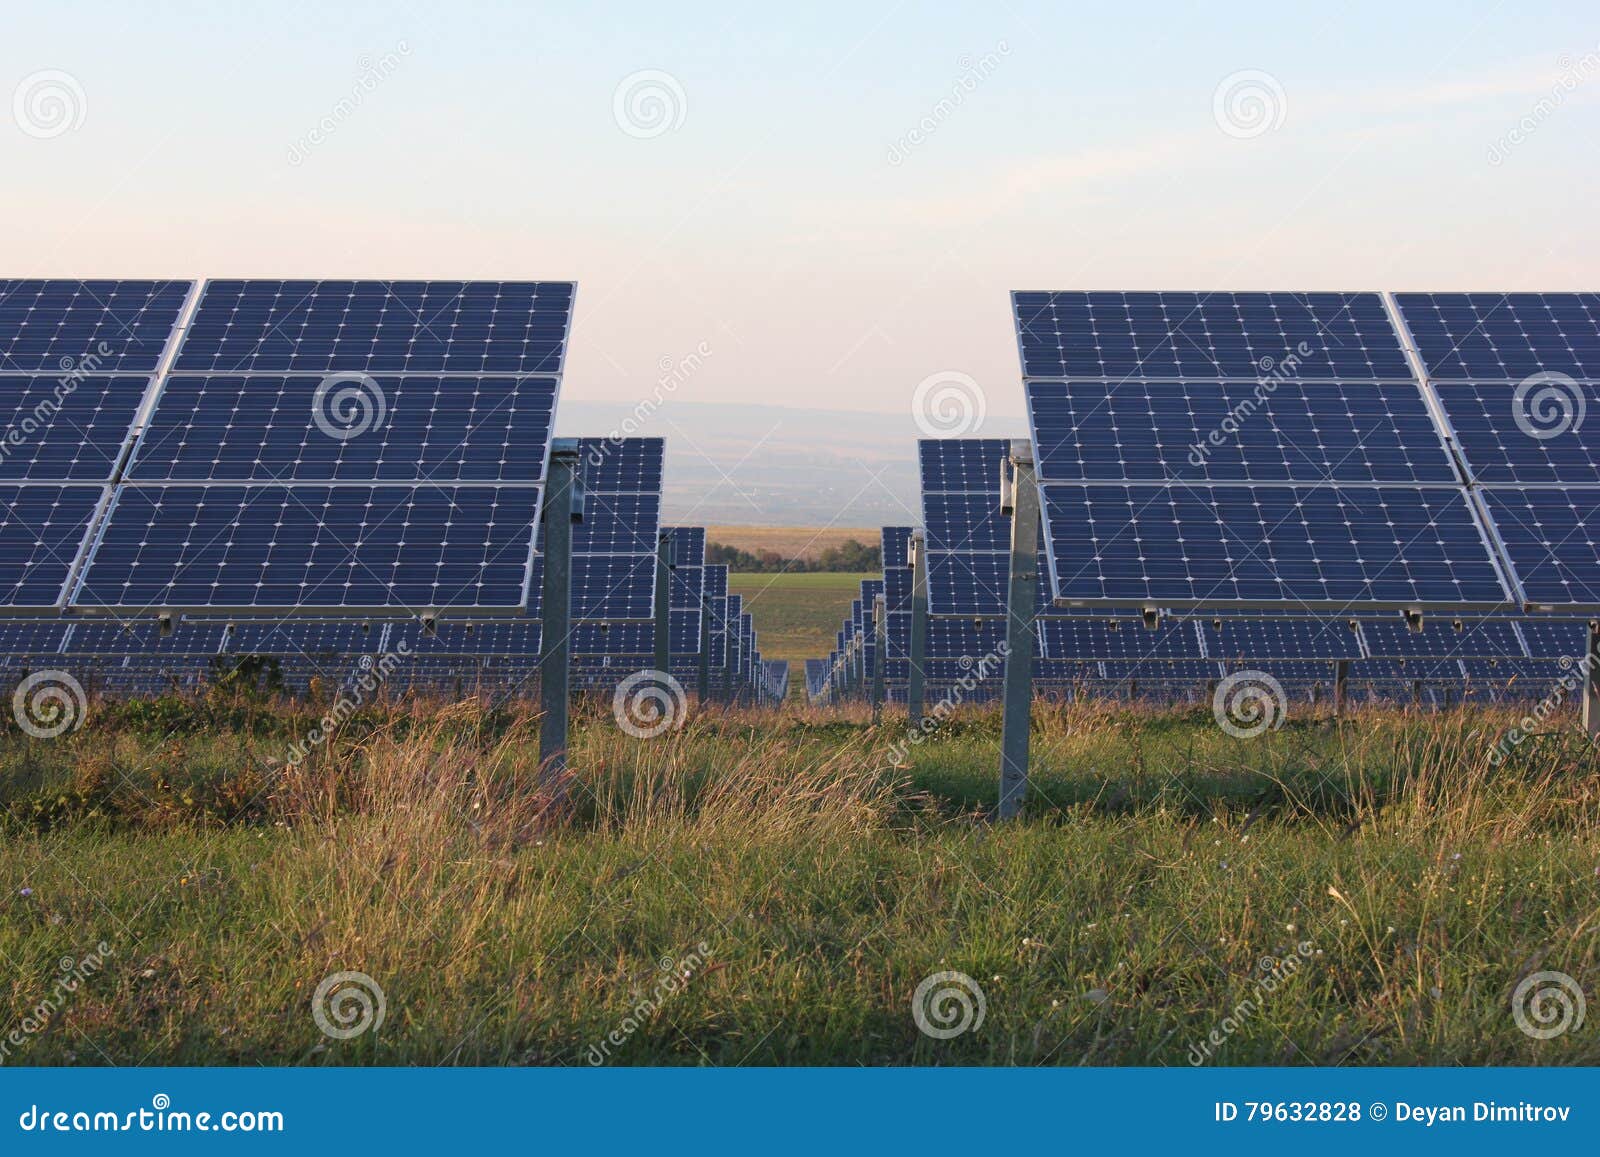 solar energy, solar panels, renewables, pv modules